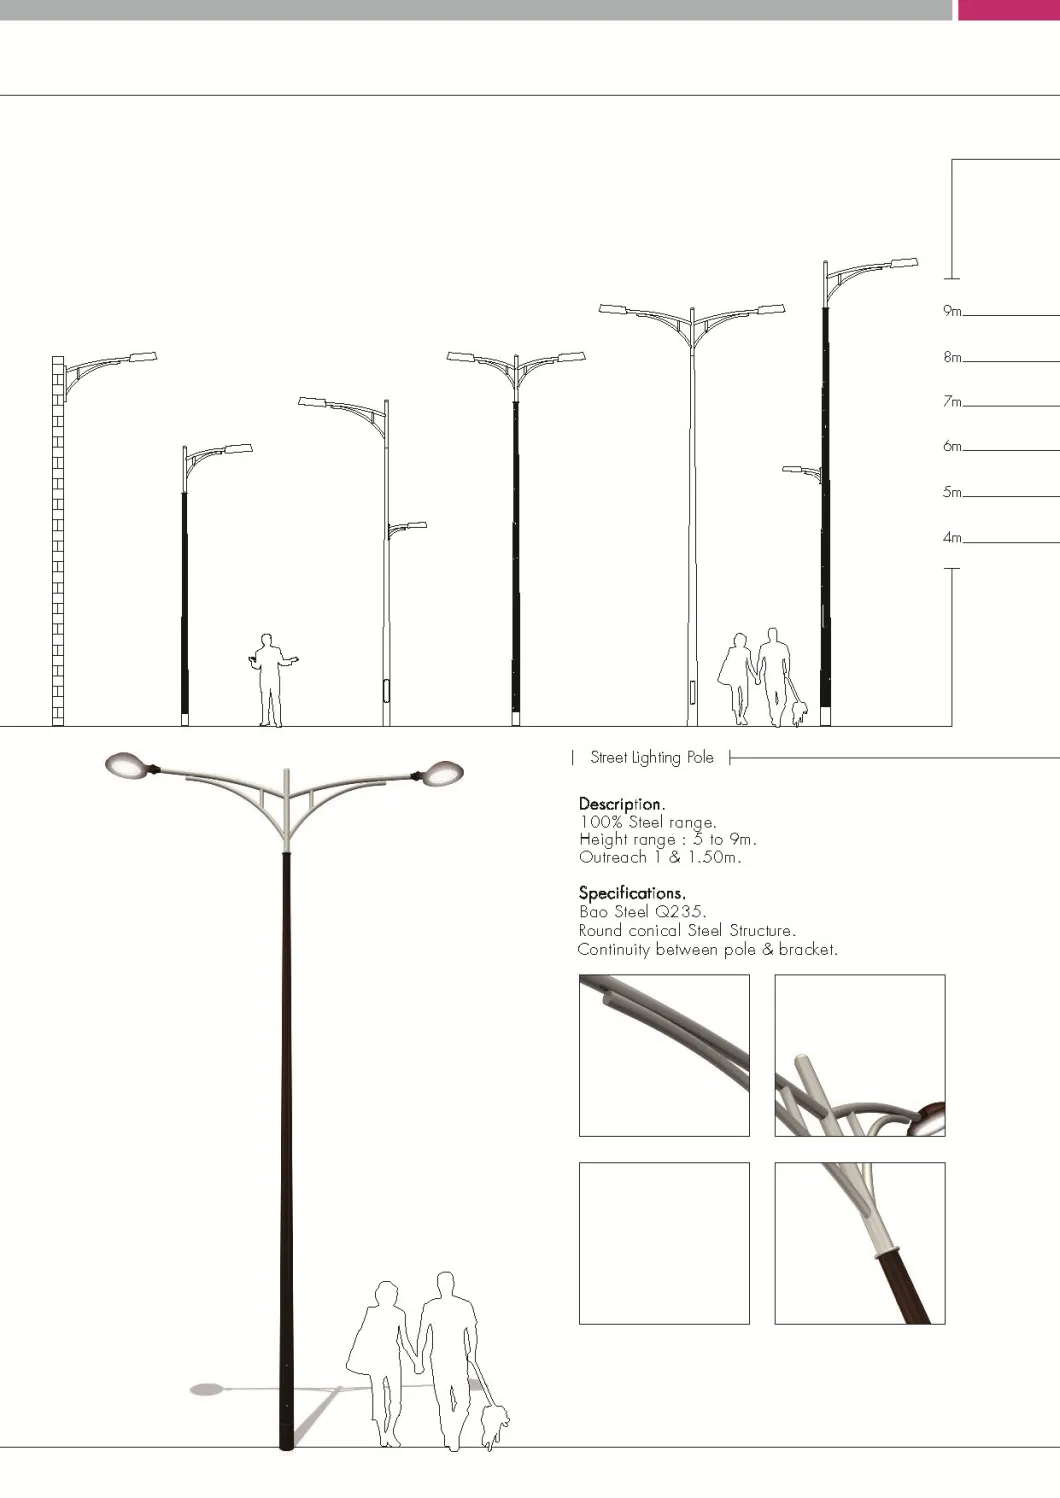 3m/4m/5m/6m/7m/8m/9m/10m/11m/12m Single/Double-Arm Conical/Octagonal Solar Garden/Street Lighting/Light Pole with Factory Price